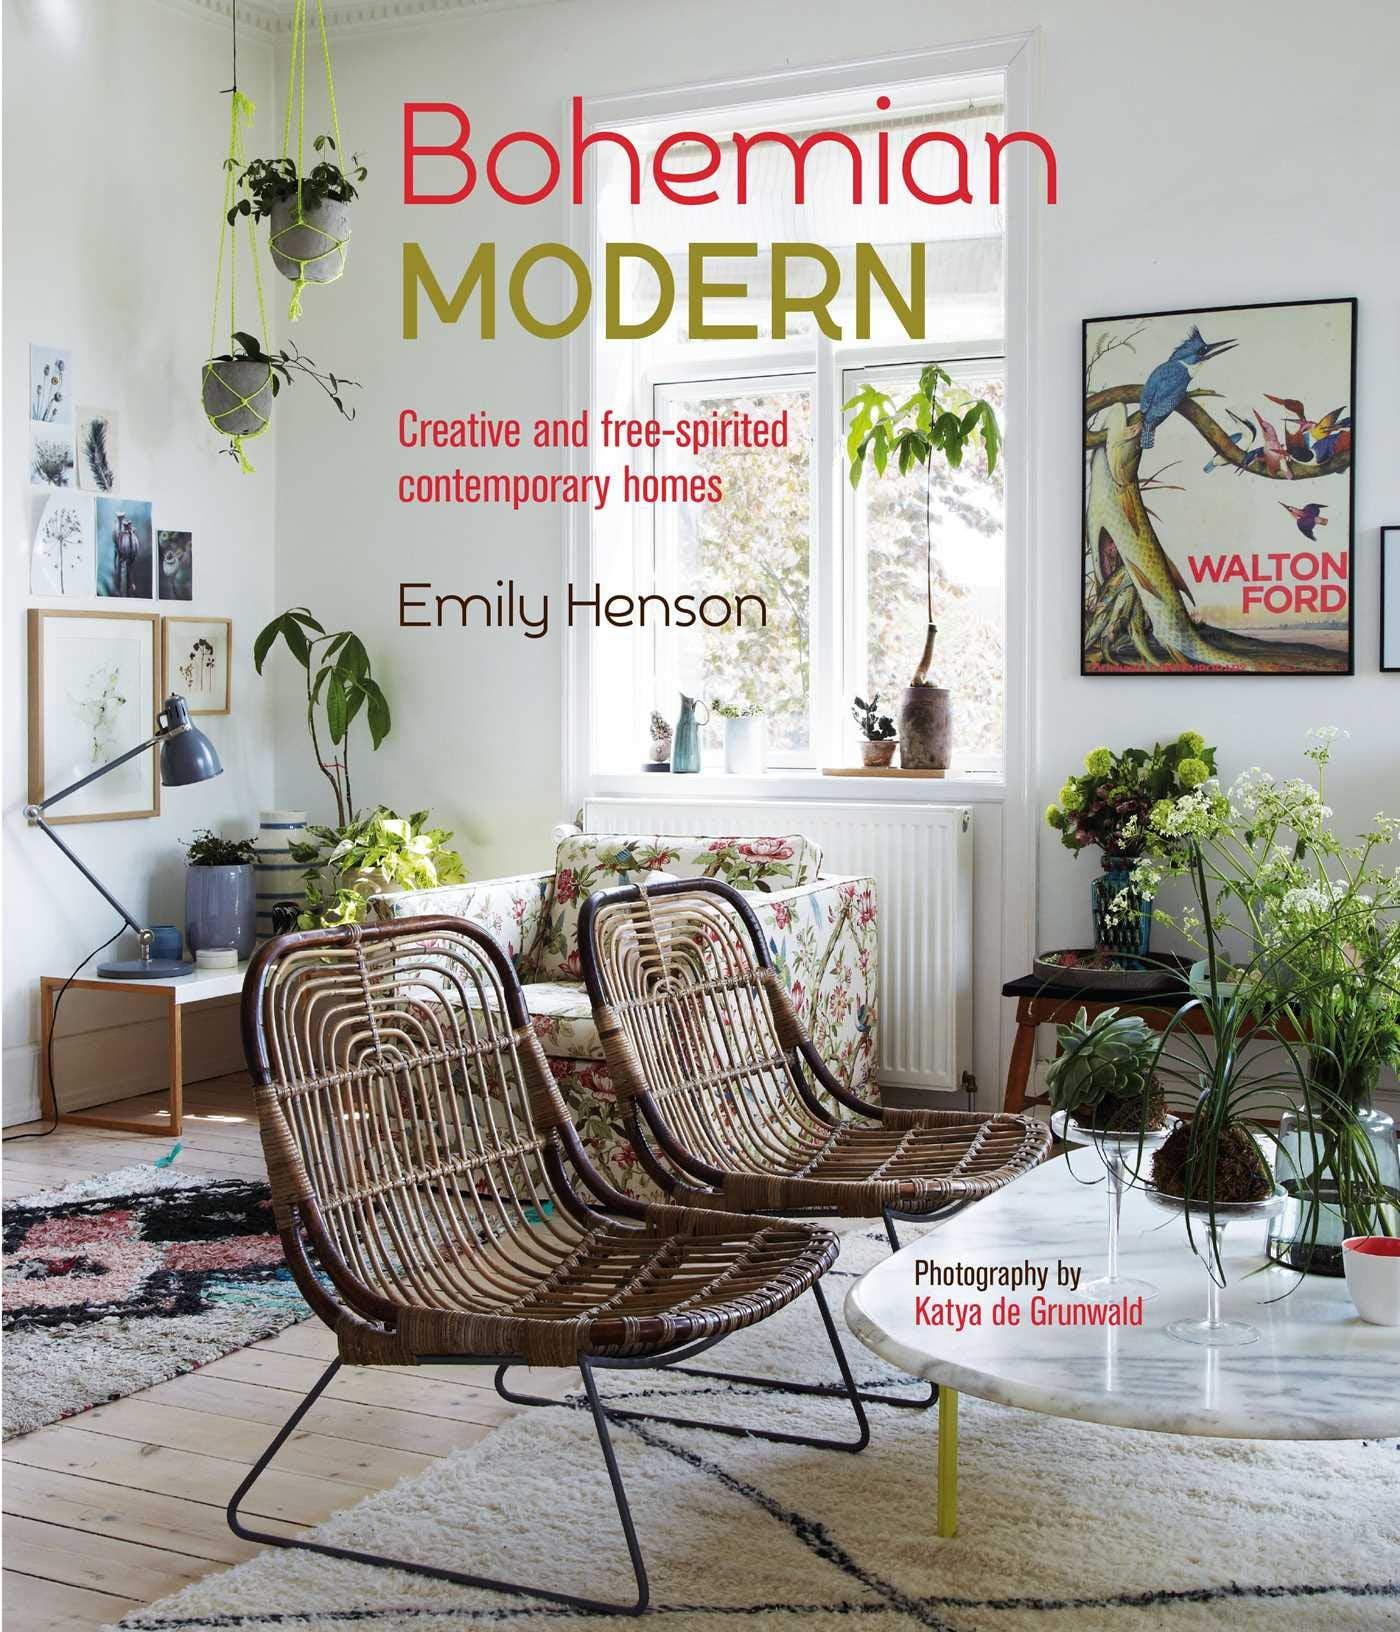 Bohemian Modern - Creative & Free-Spirited Contemporary Homes by Emily Henson